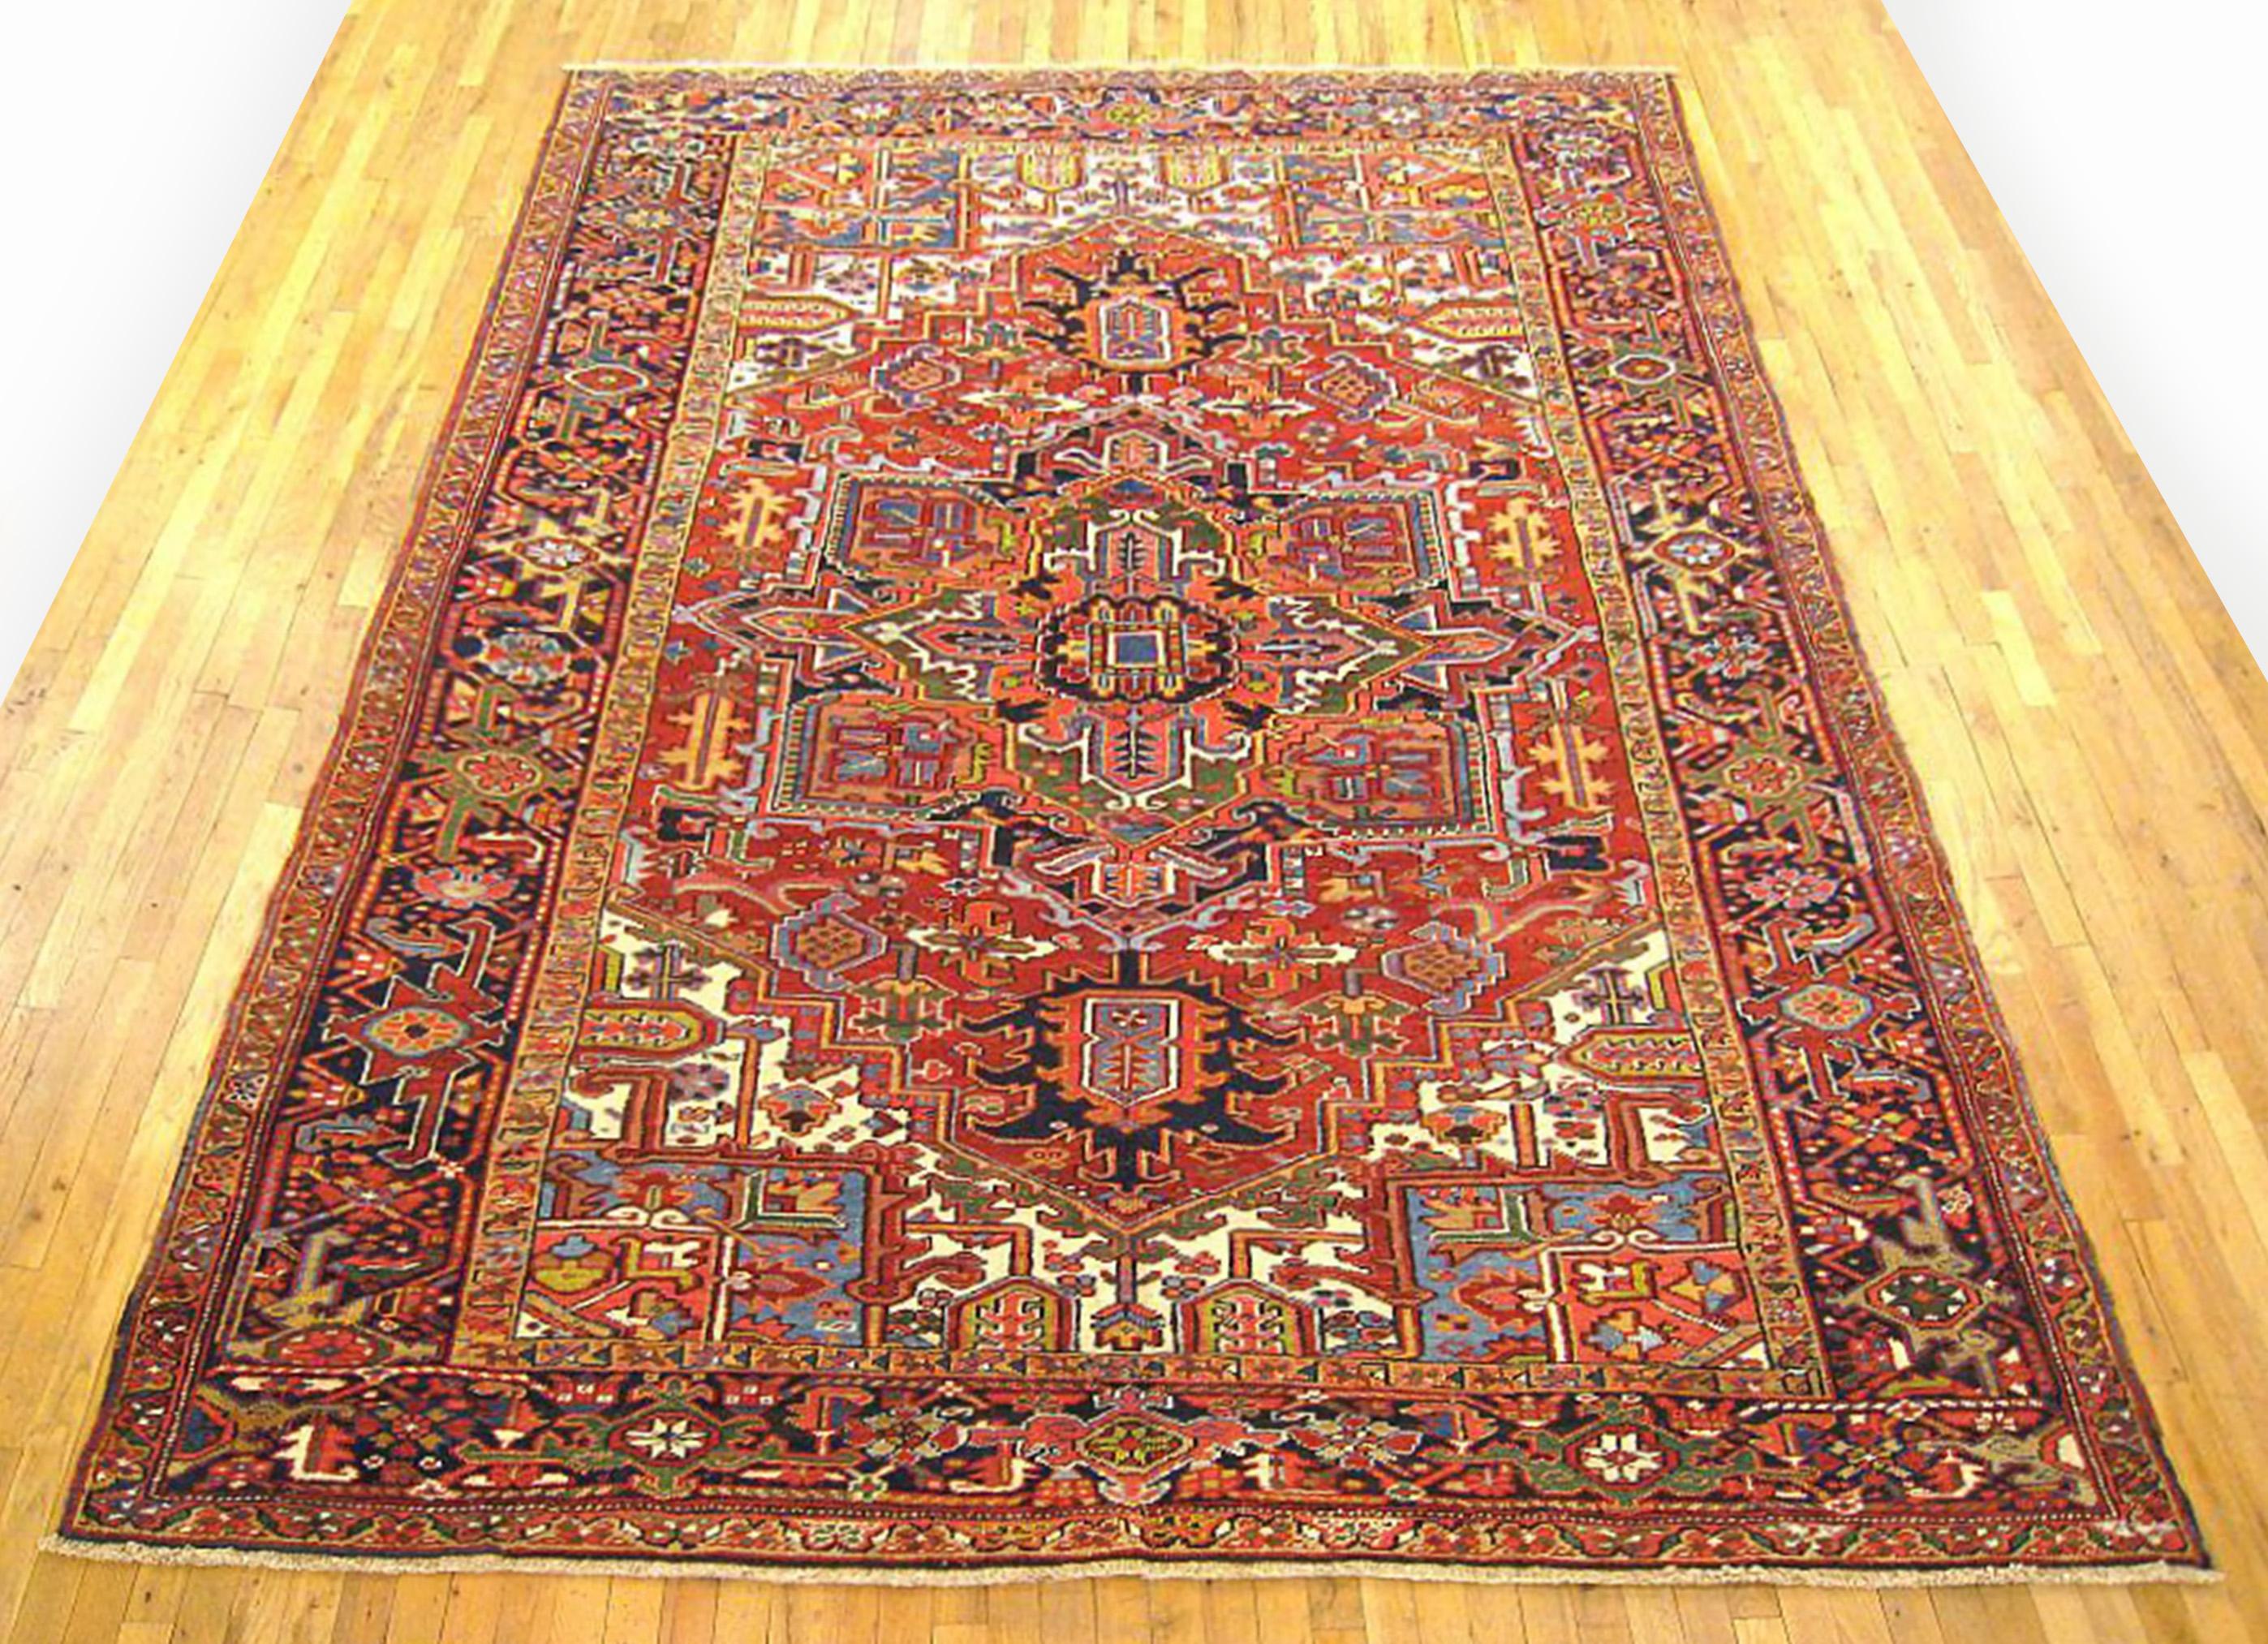 Vintage Persian Heriz oriental rug, room size

A vintage Persian Heriz oriental rug, size 11'3